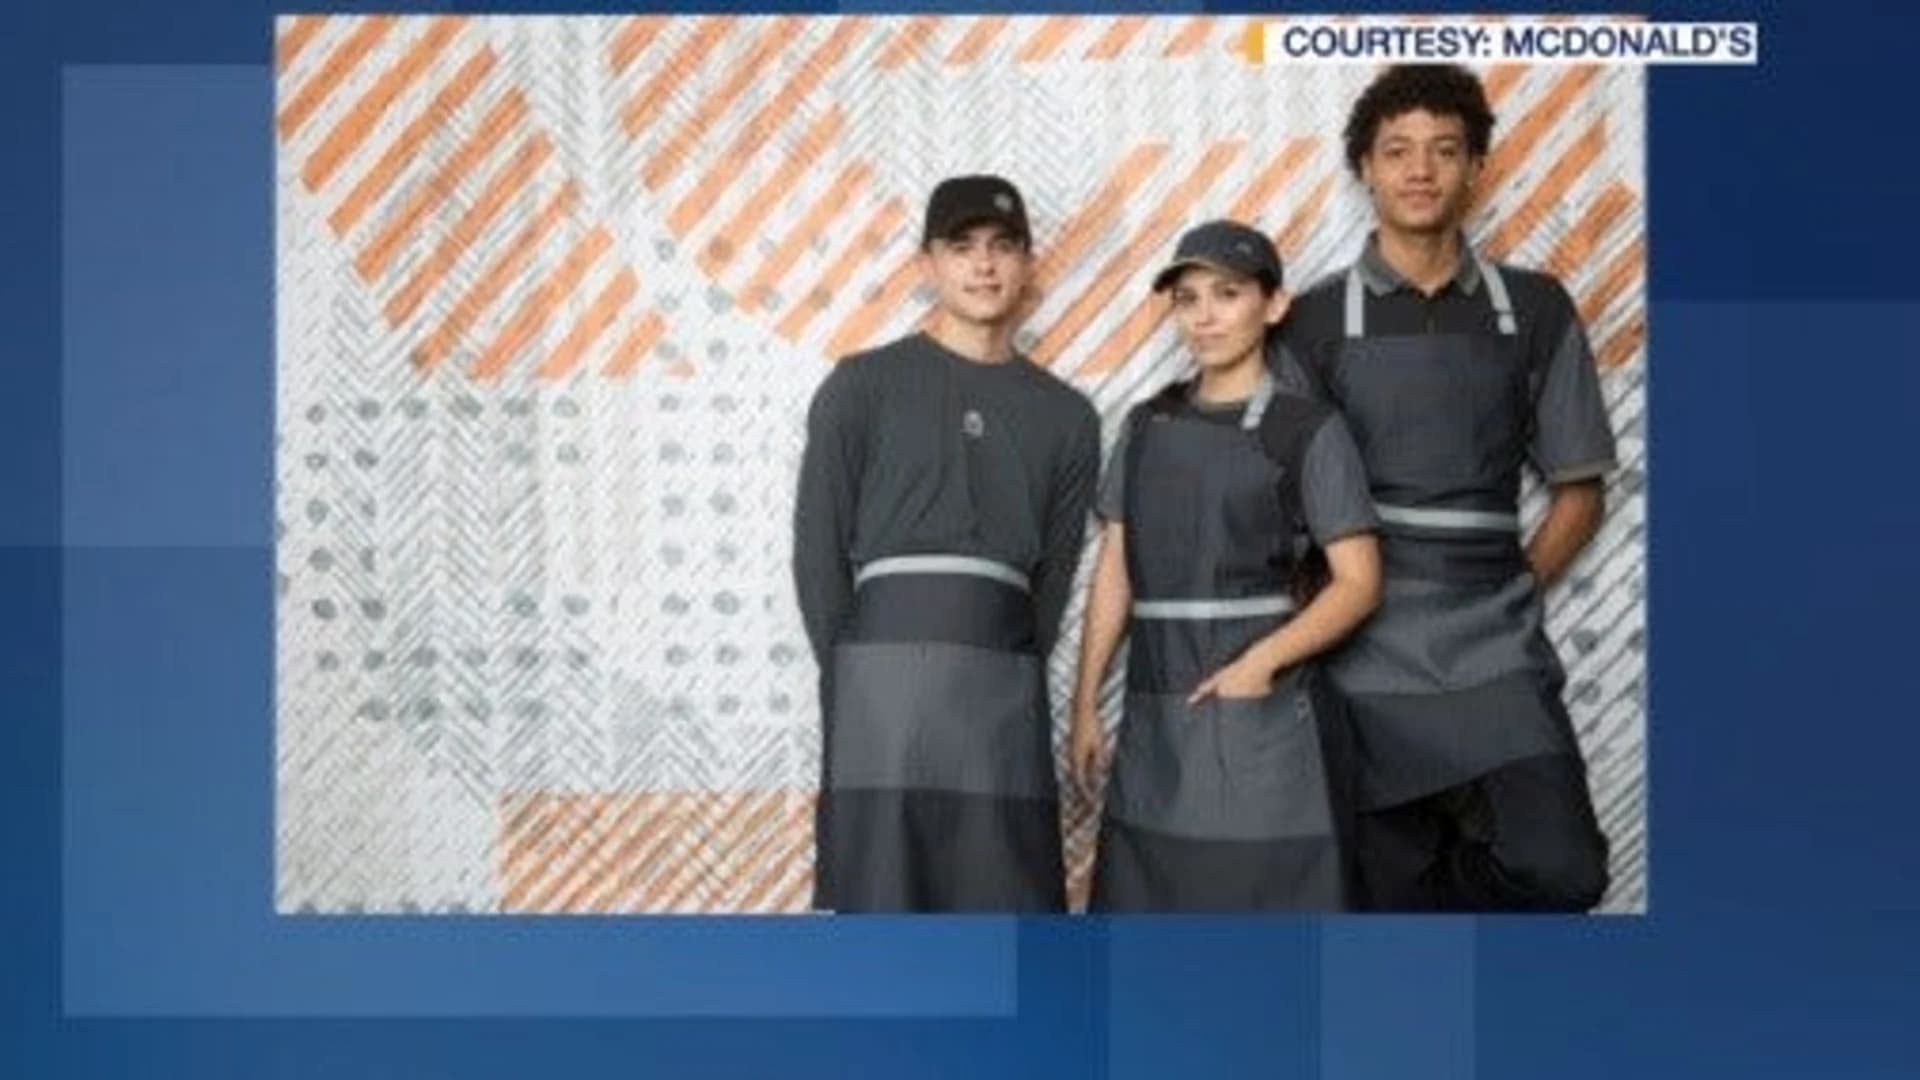 Critics: McDonald’s new employee uniforms compared to Stars Wars, North Korean government